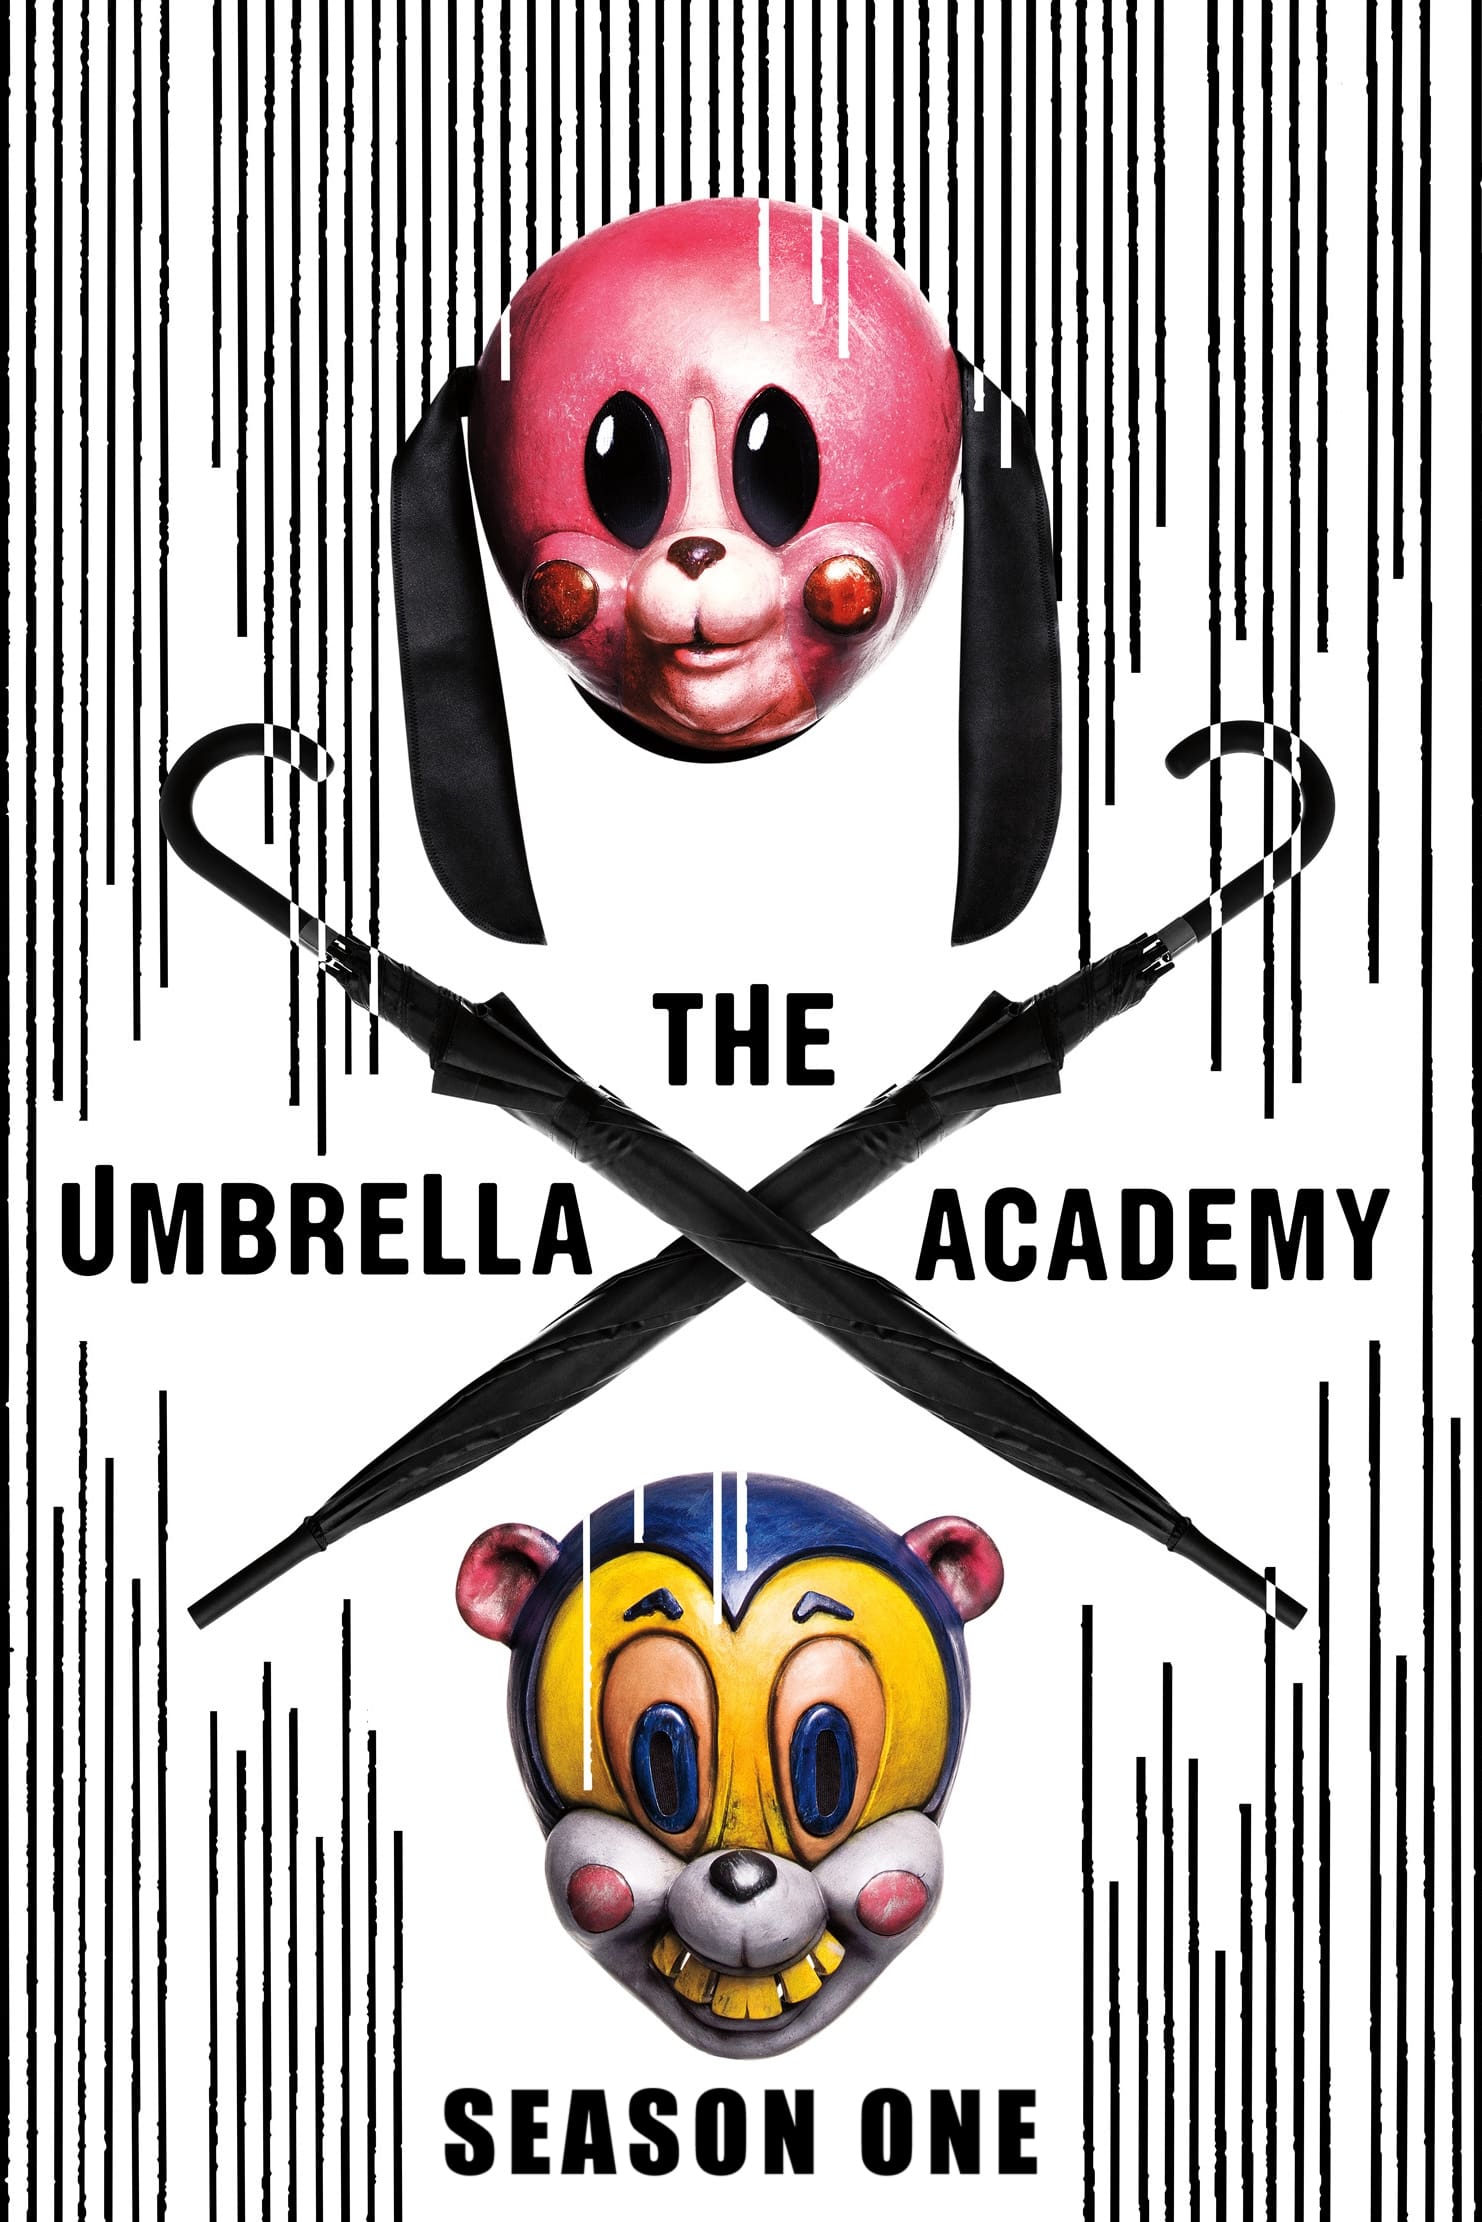 The Umbrella Academy 2019 Wallpapers